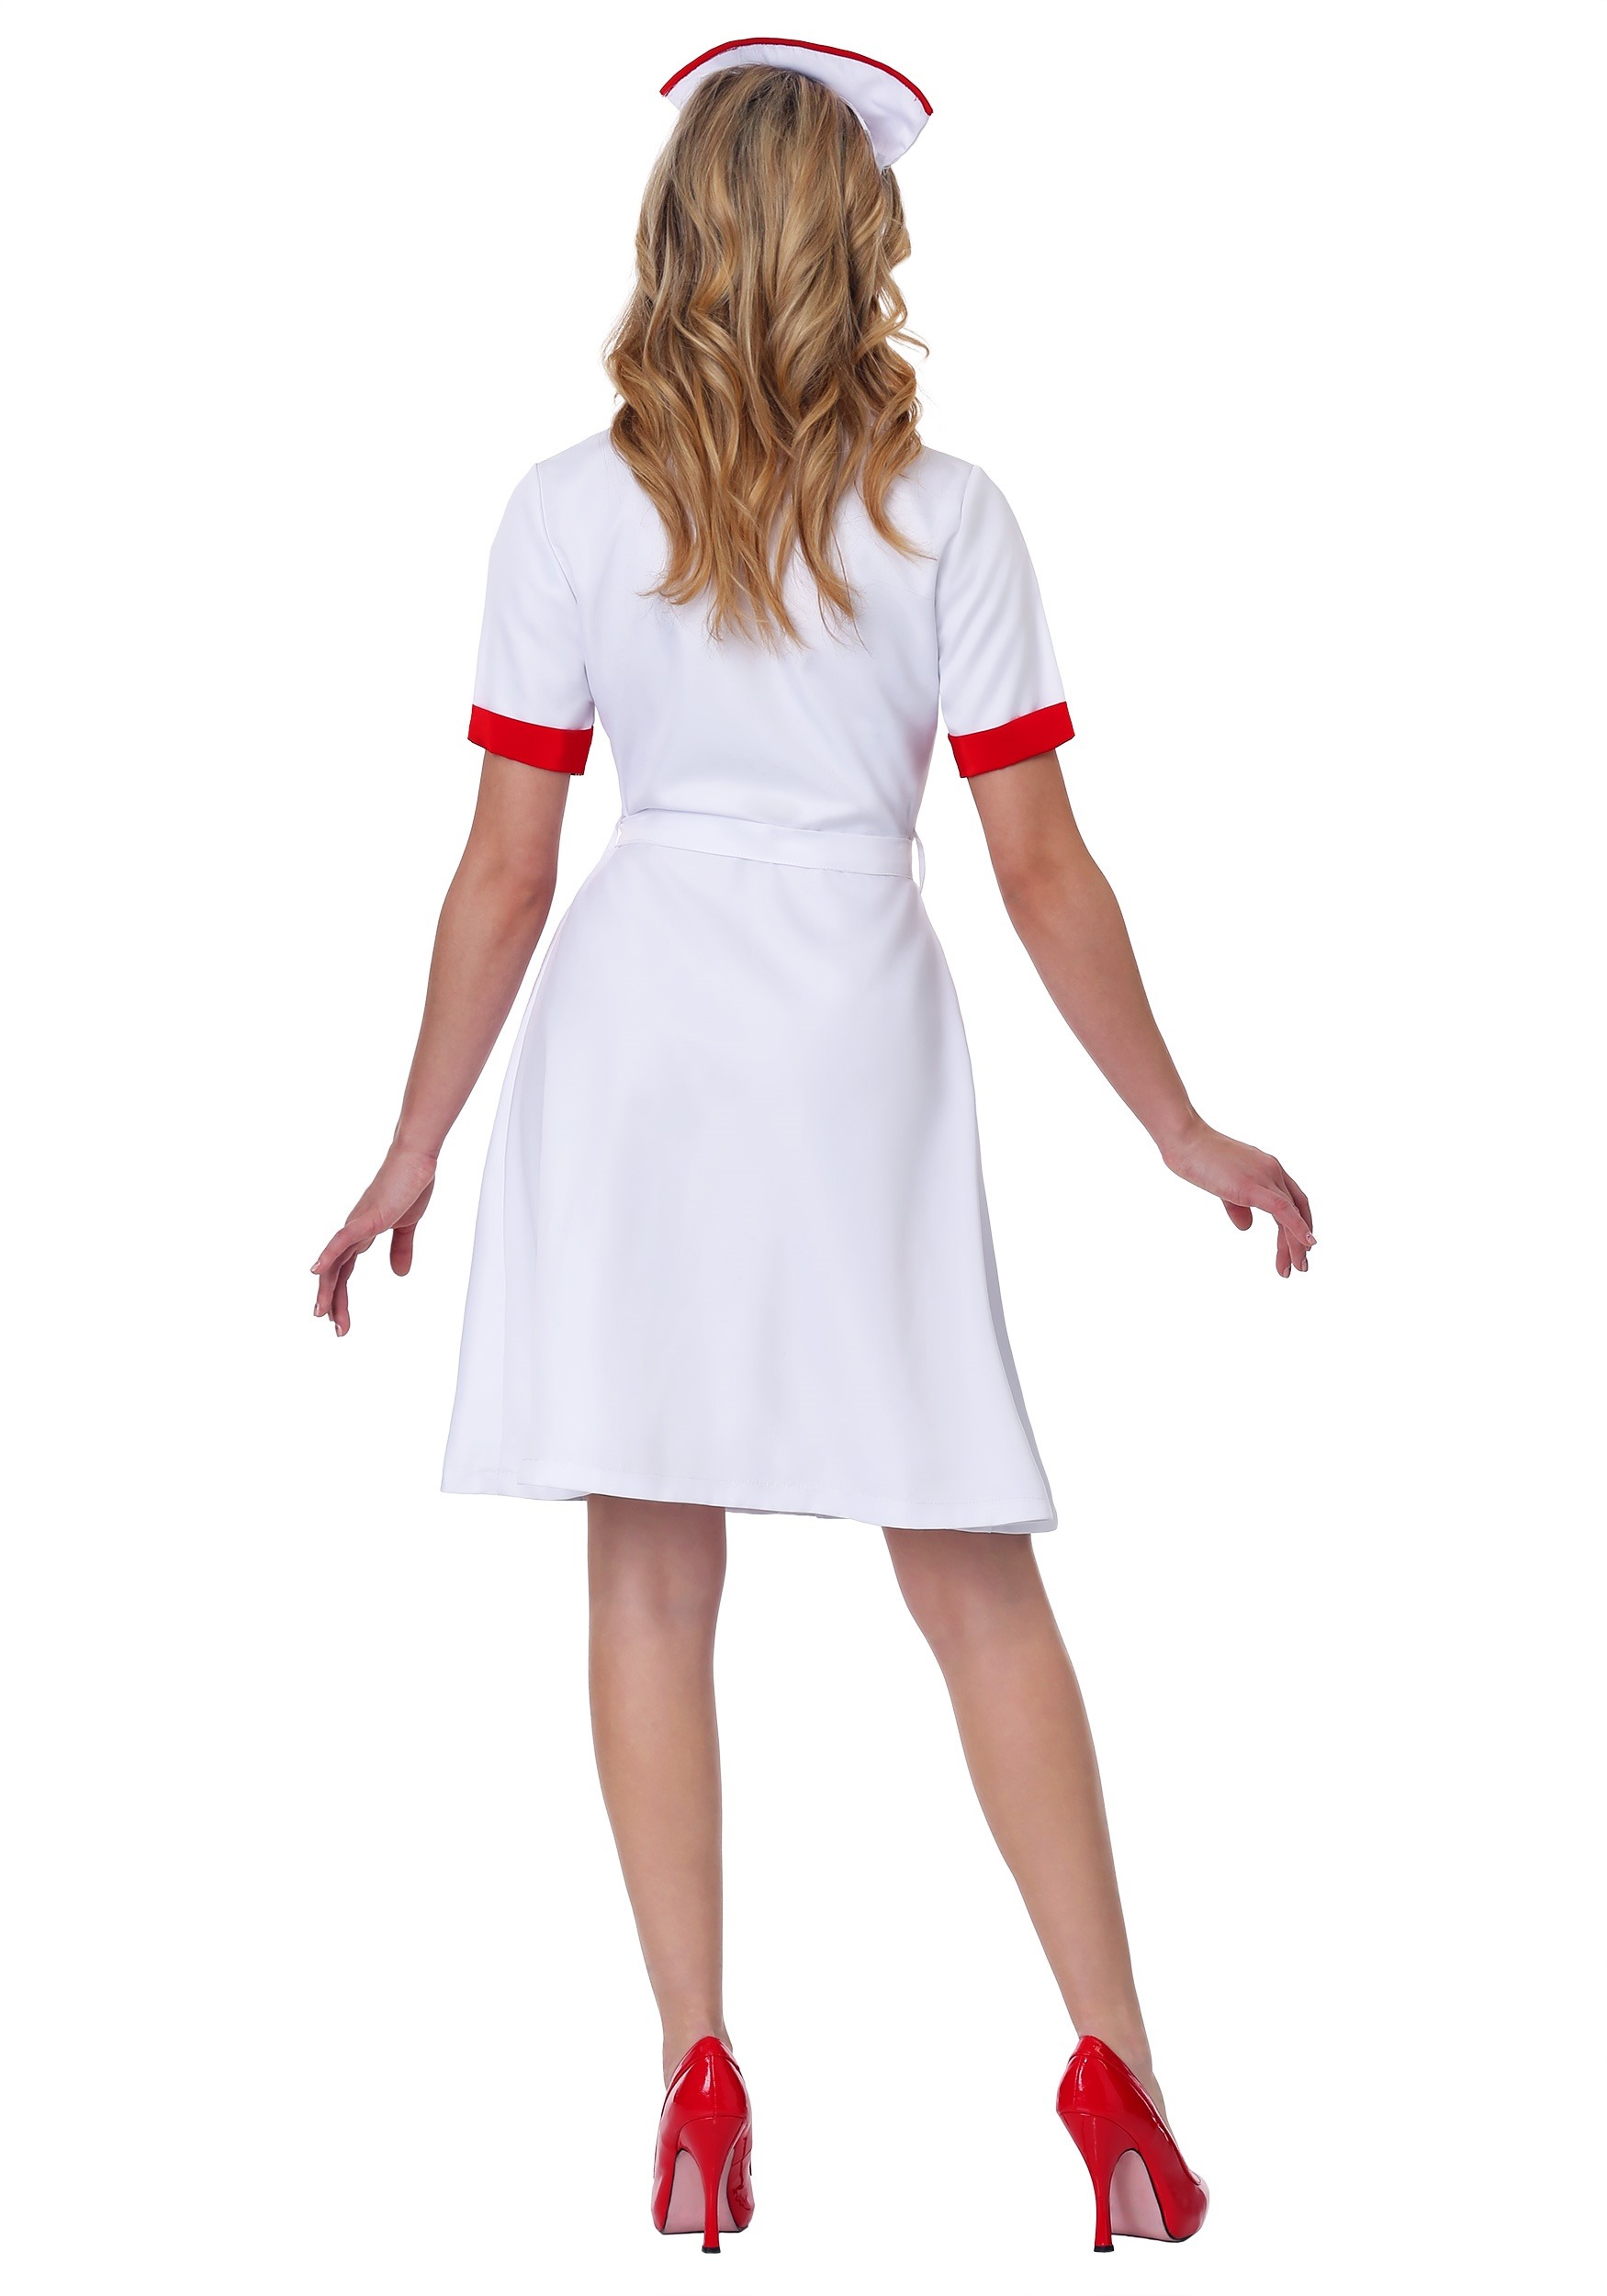 Stitch Me Up Nurse Fancy Dress Costume For Women